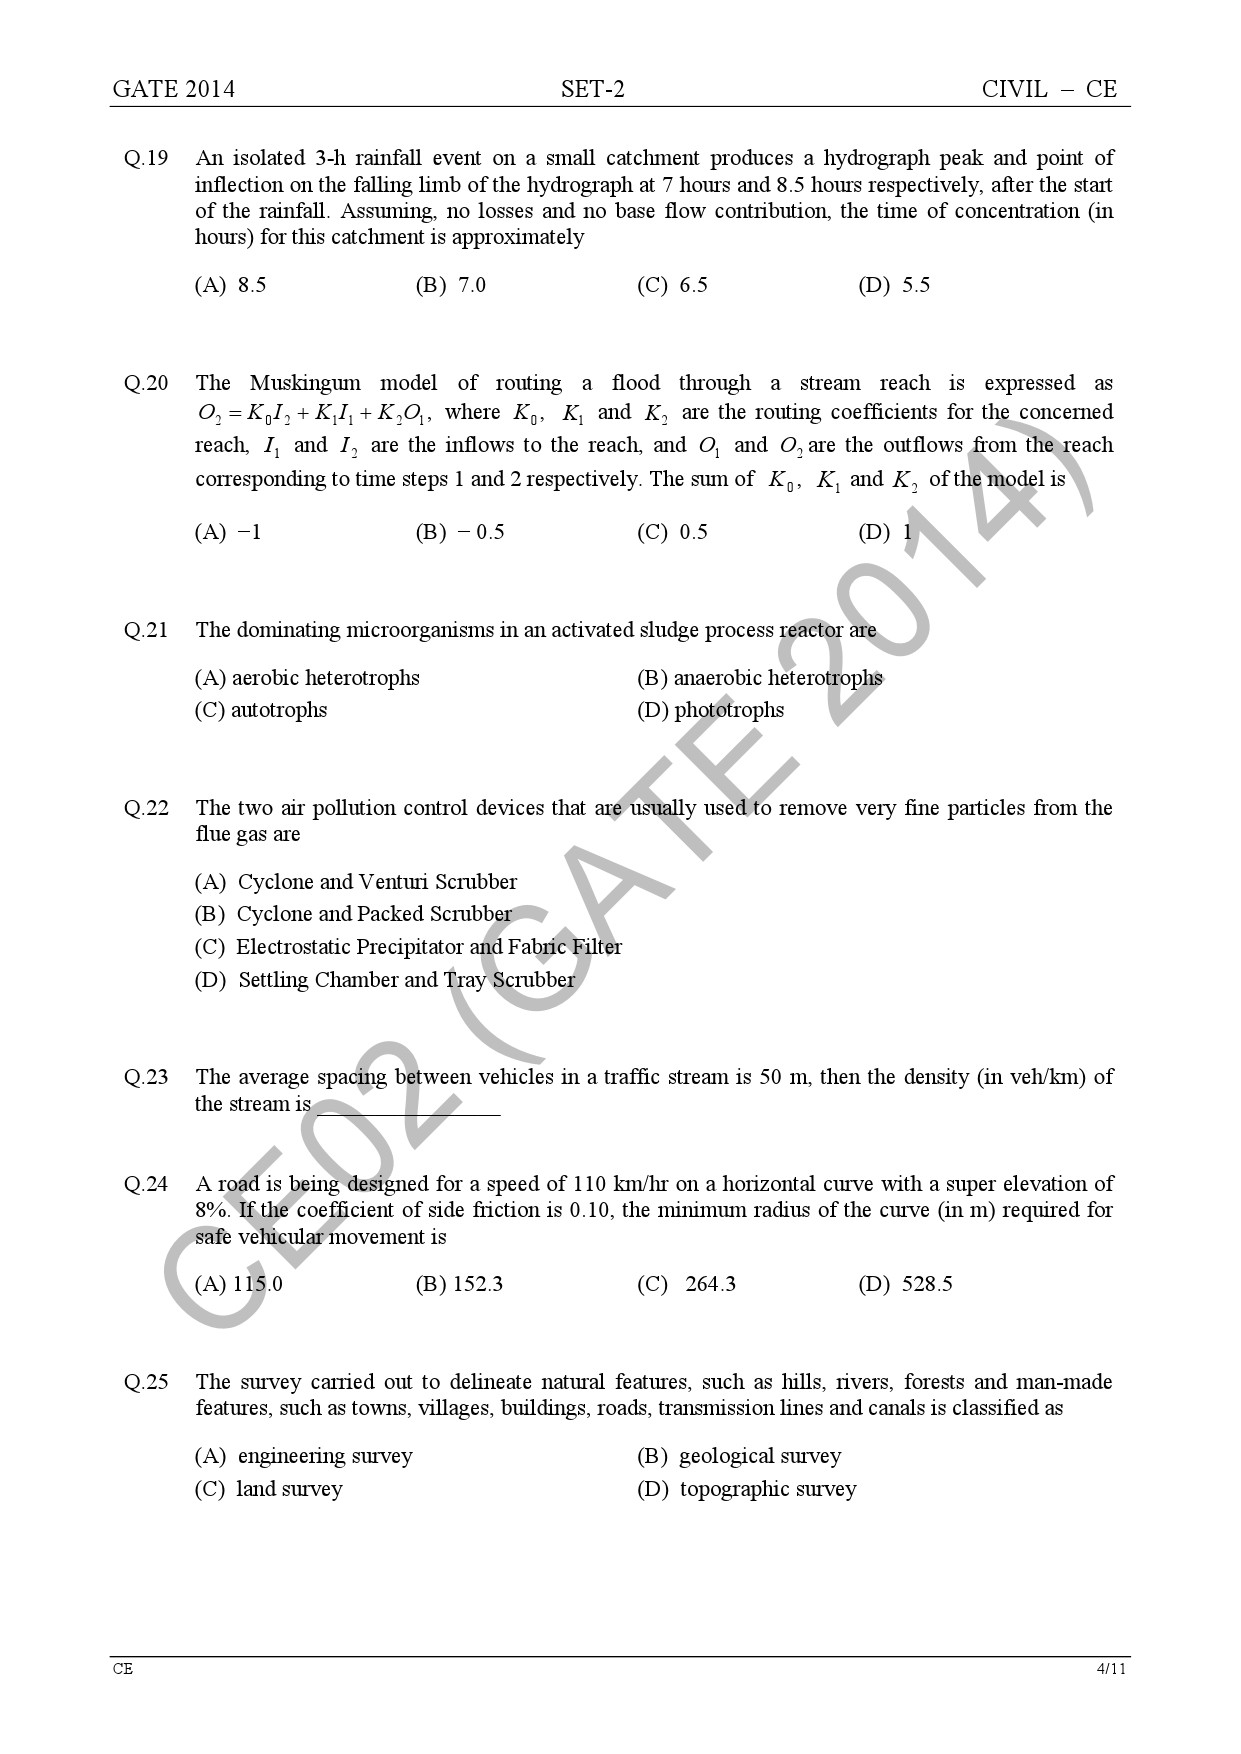 GATE Exam Question Paper 2014 Civil Engineering Set 2 10